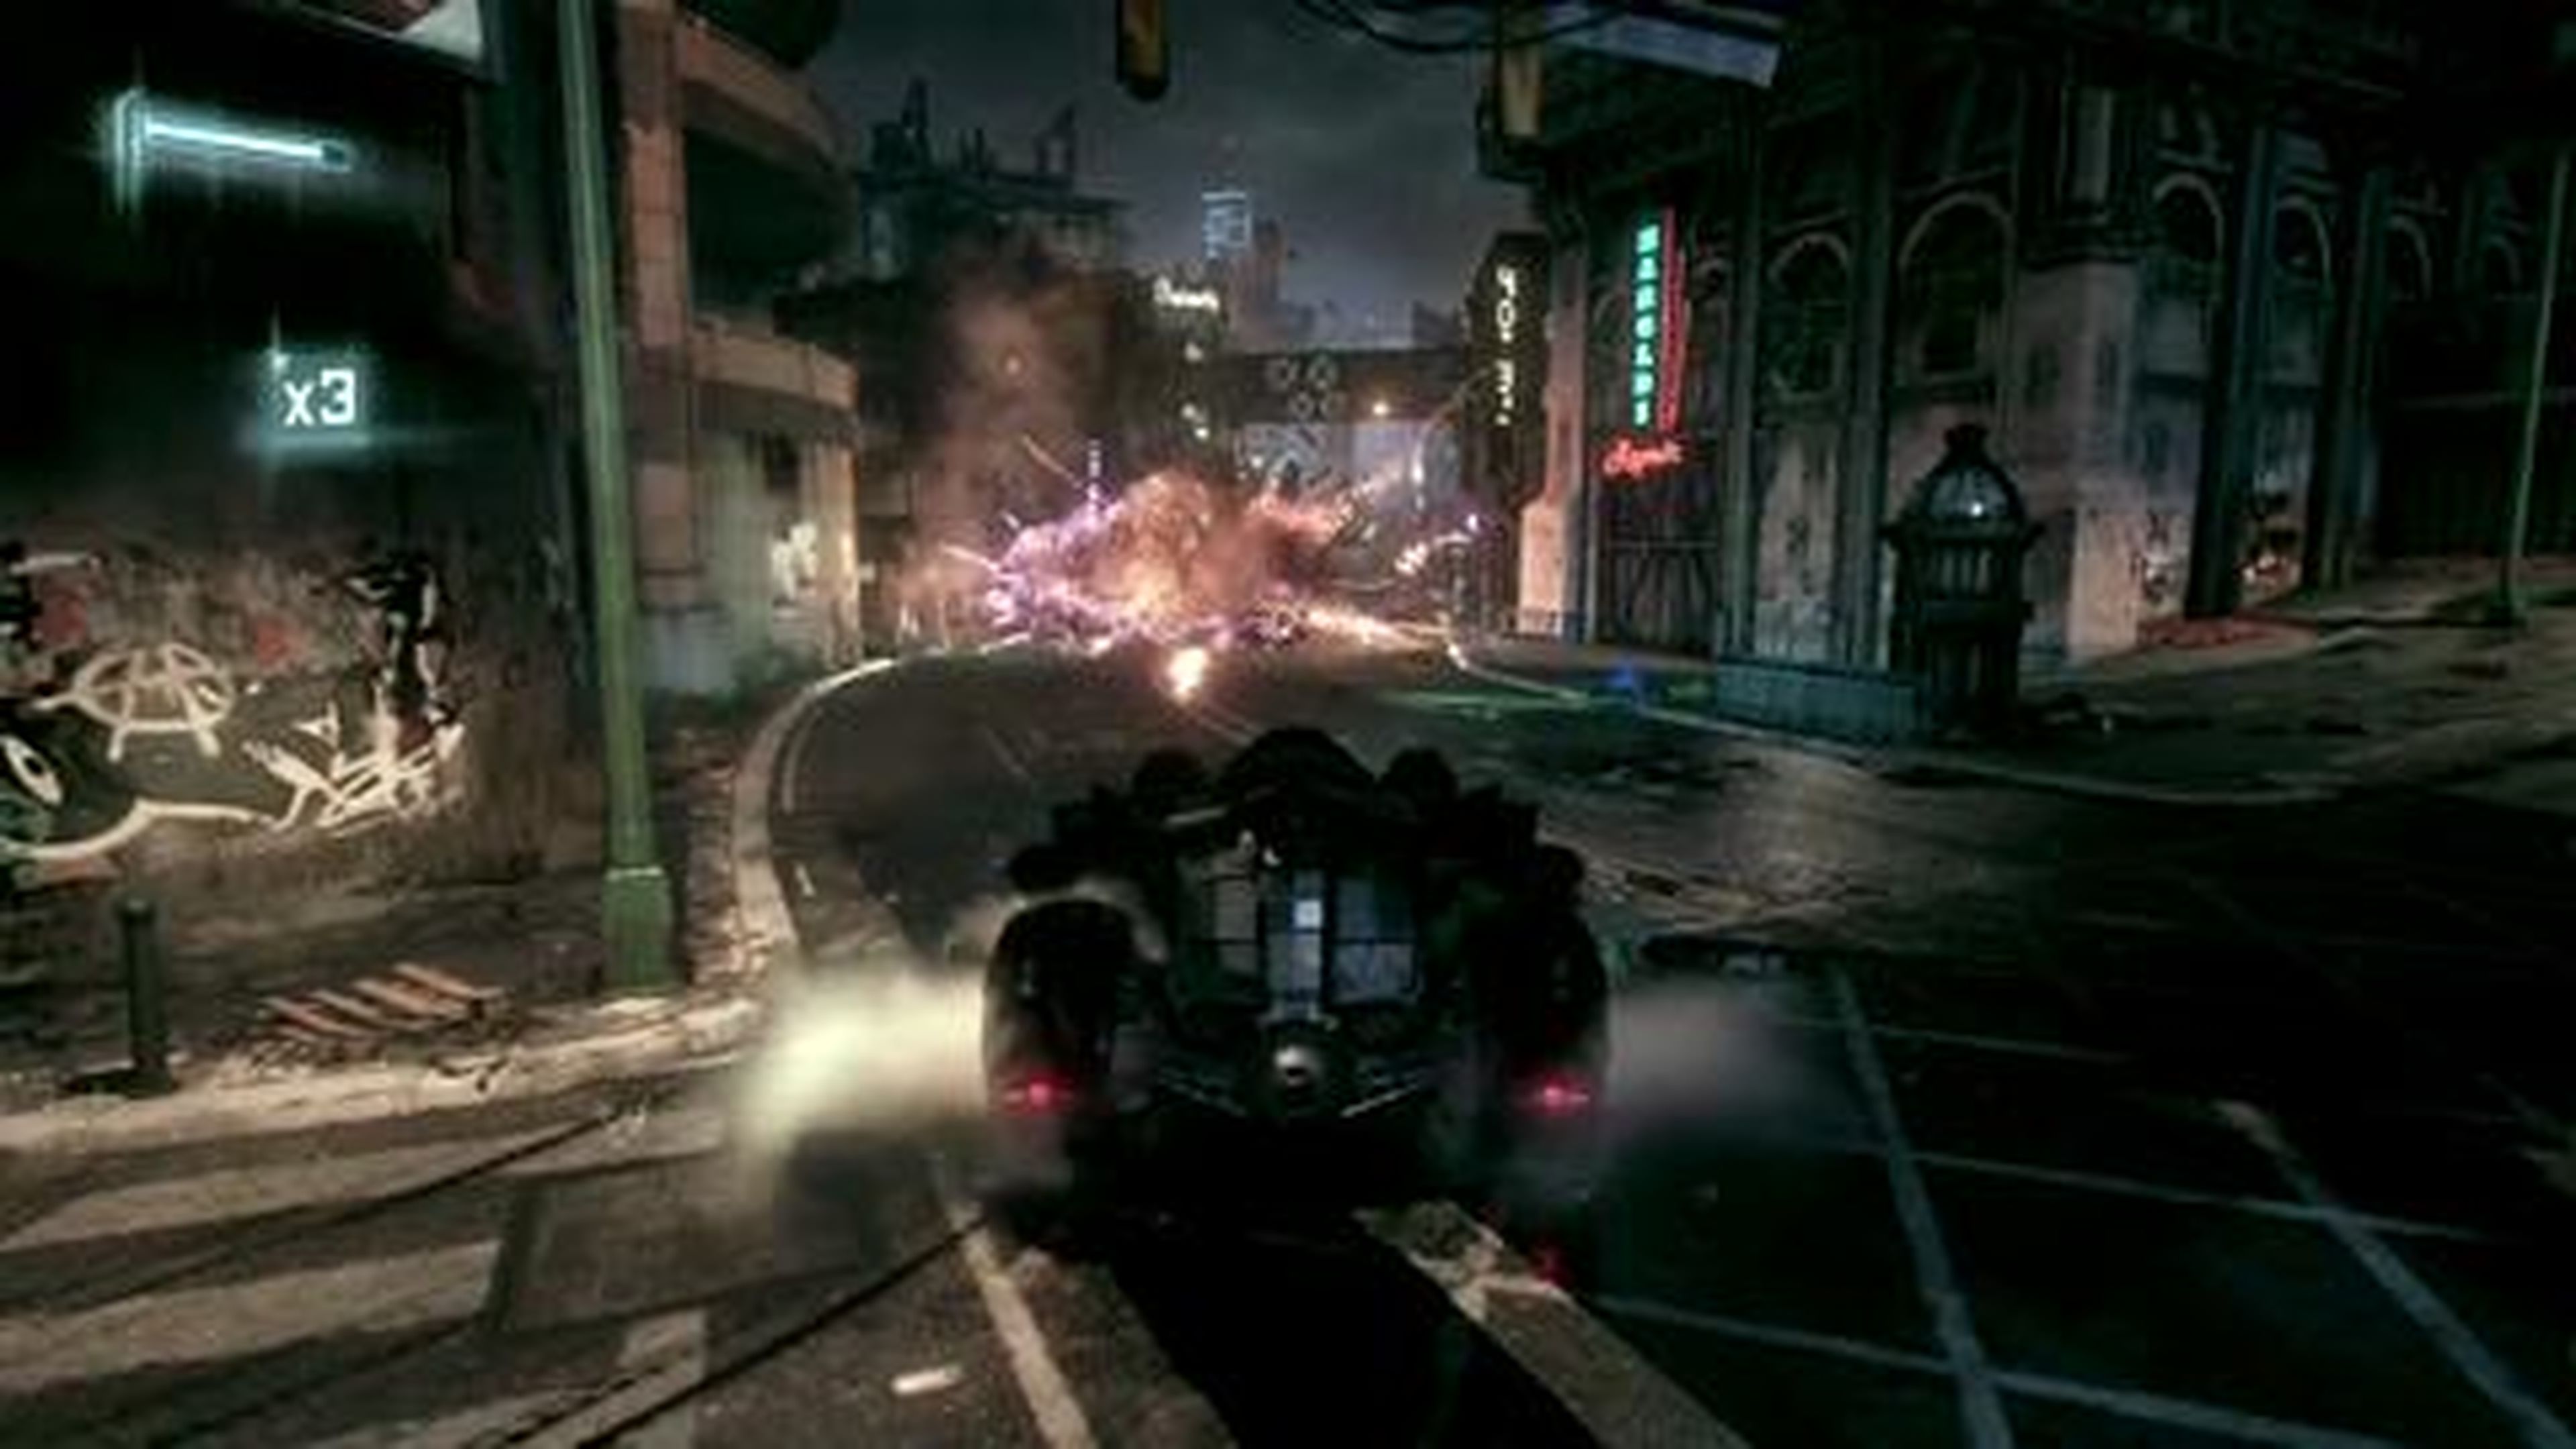 Batman Arkham Knight - Batmobile & Battle Mode Gameplay en castellano en HobbyConsolas.com